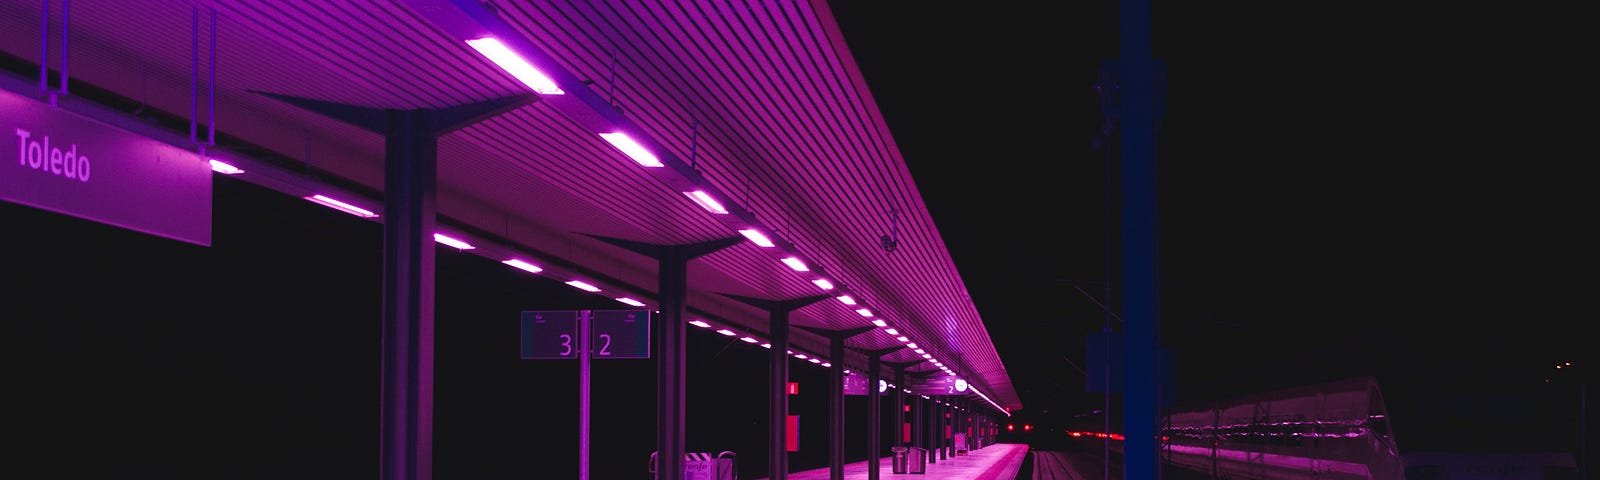 A train station platform at night